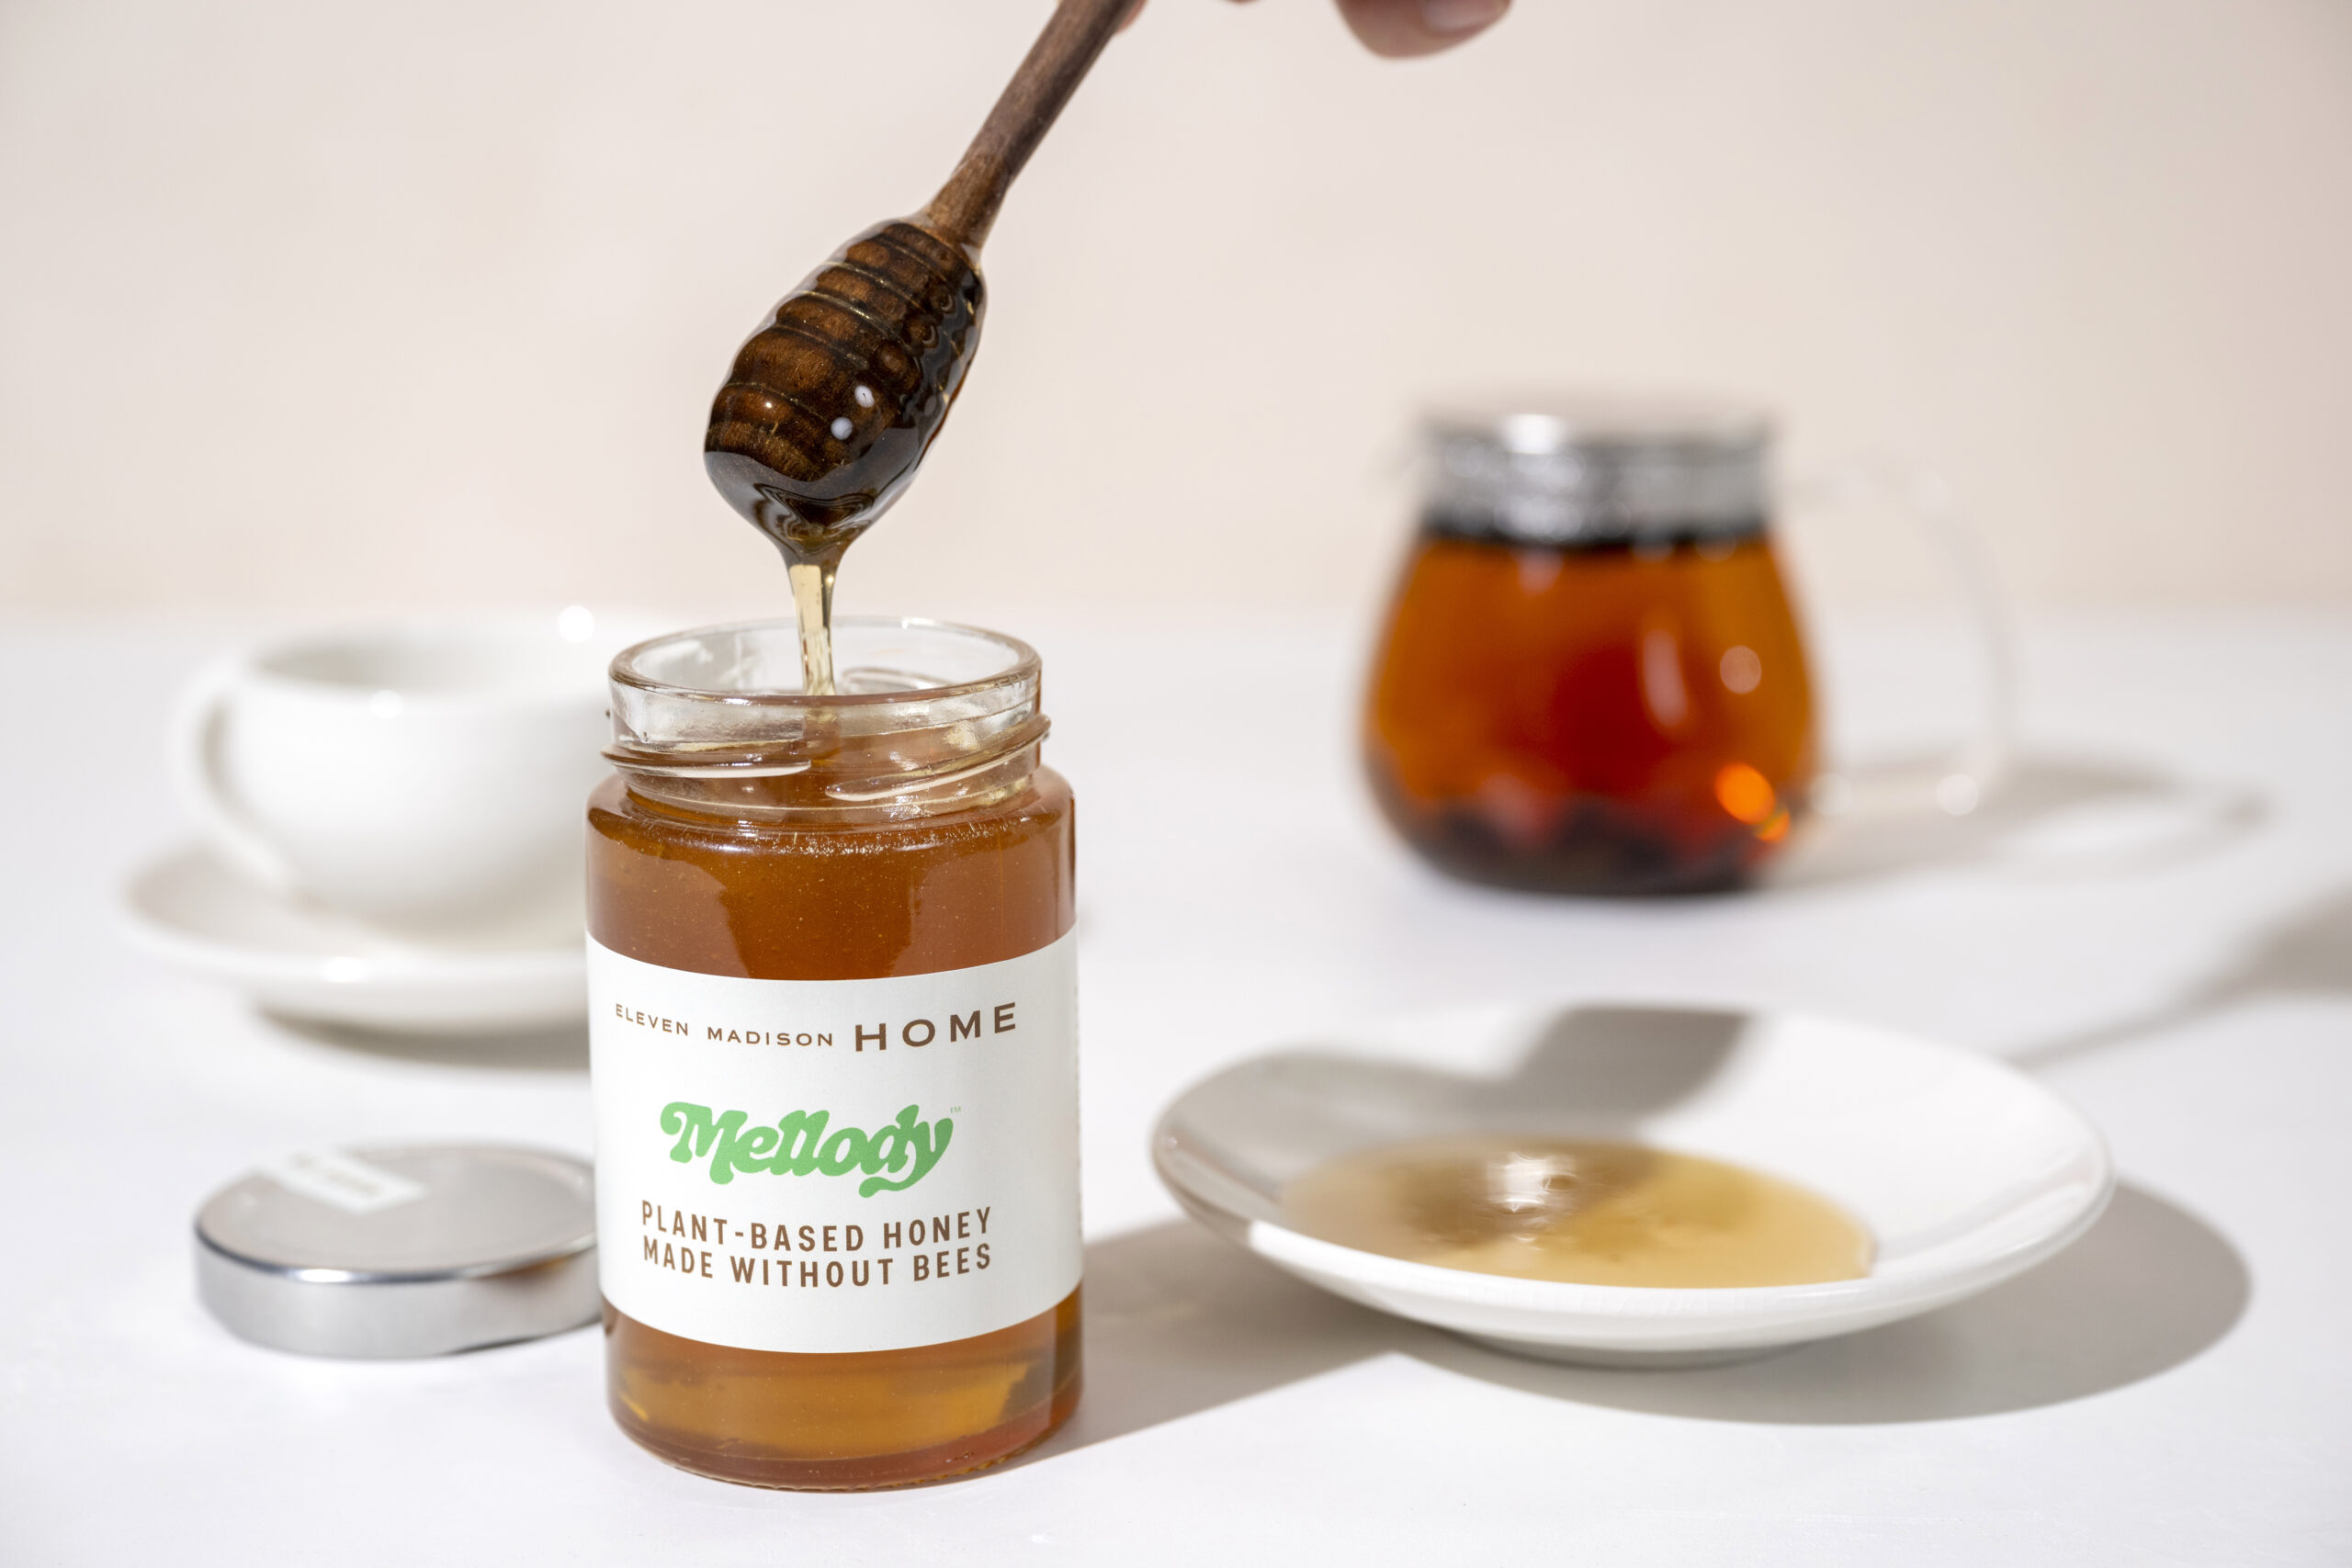 Lehigh Valley: Curious about Plant-Based Honey Taste? Mellody's Darko Mandich reveals the Surprise